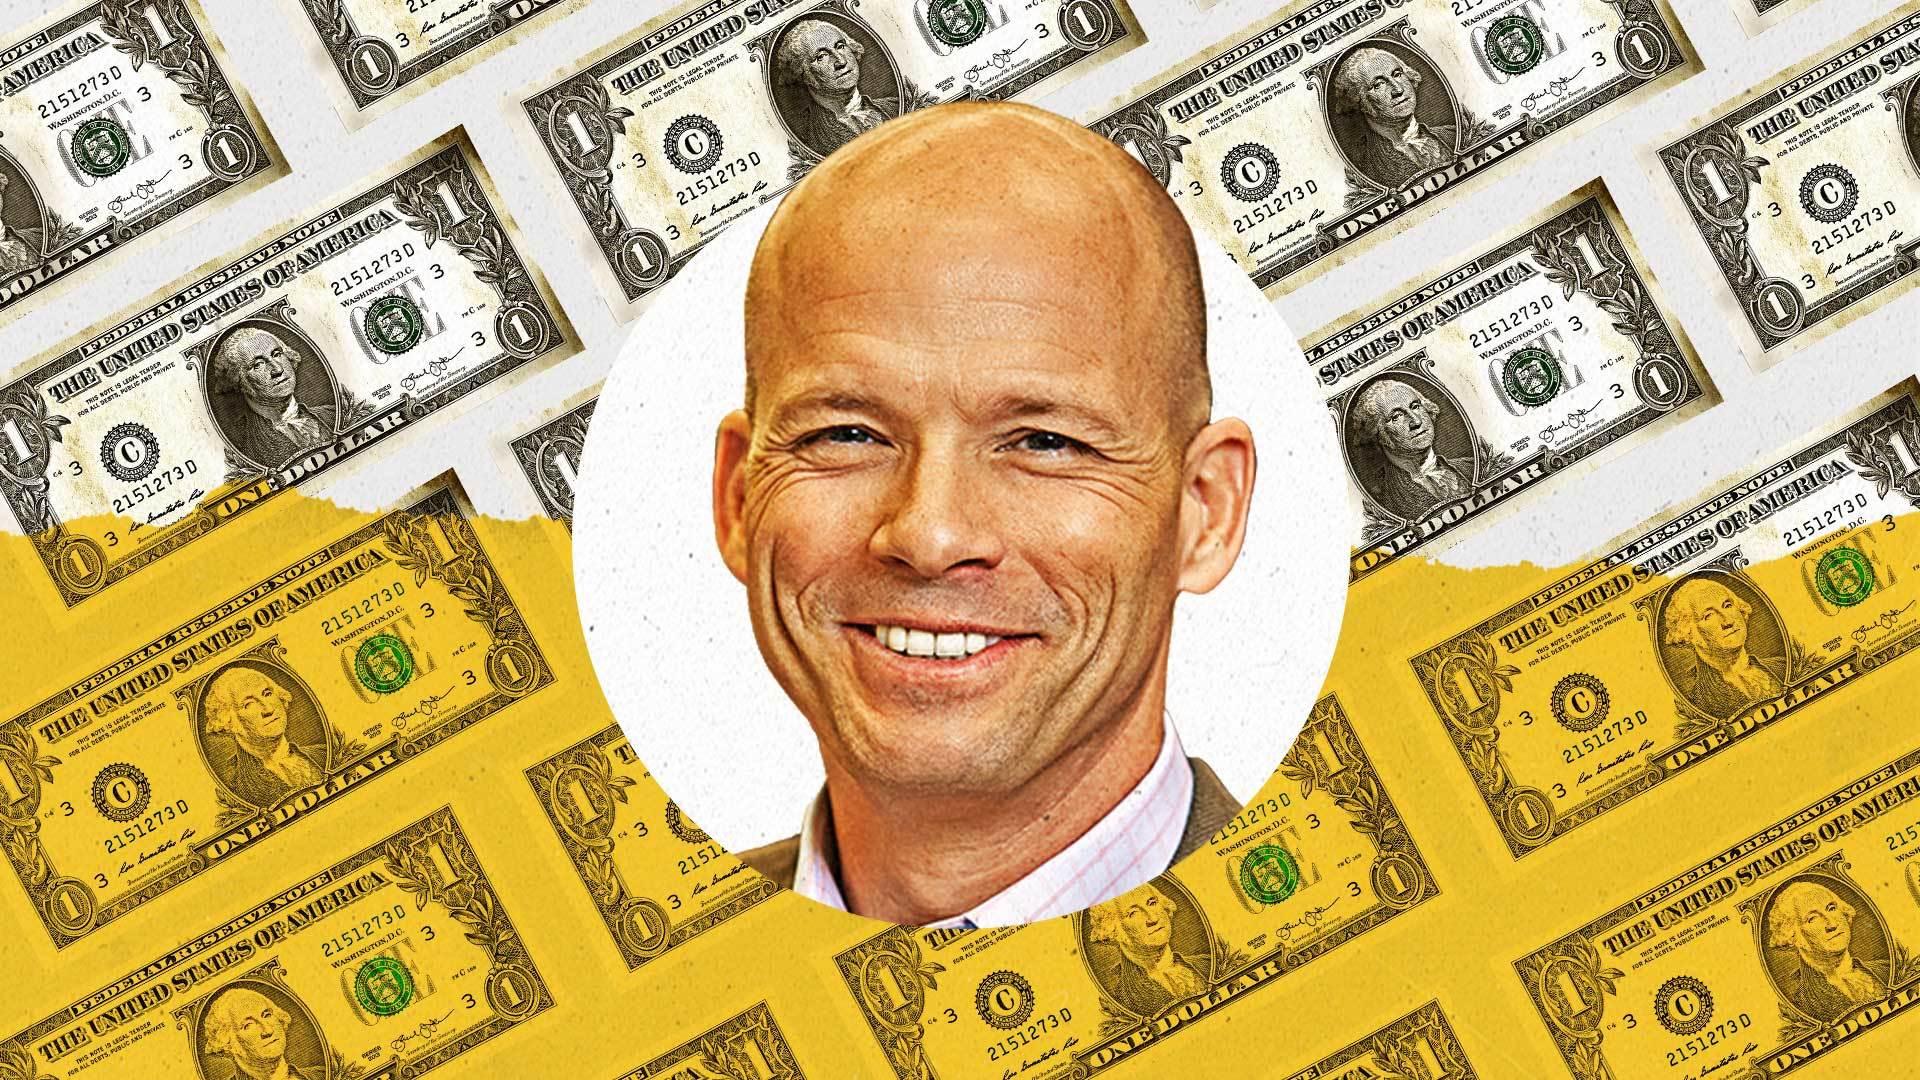 Dollar General CMO Chad Fox's headshot with dollar bills surrounding him on a half yellow background.